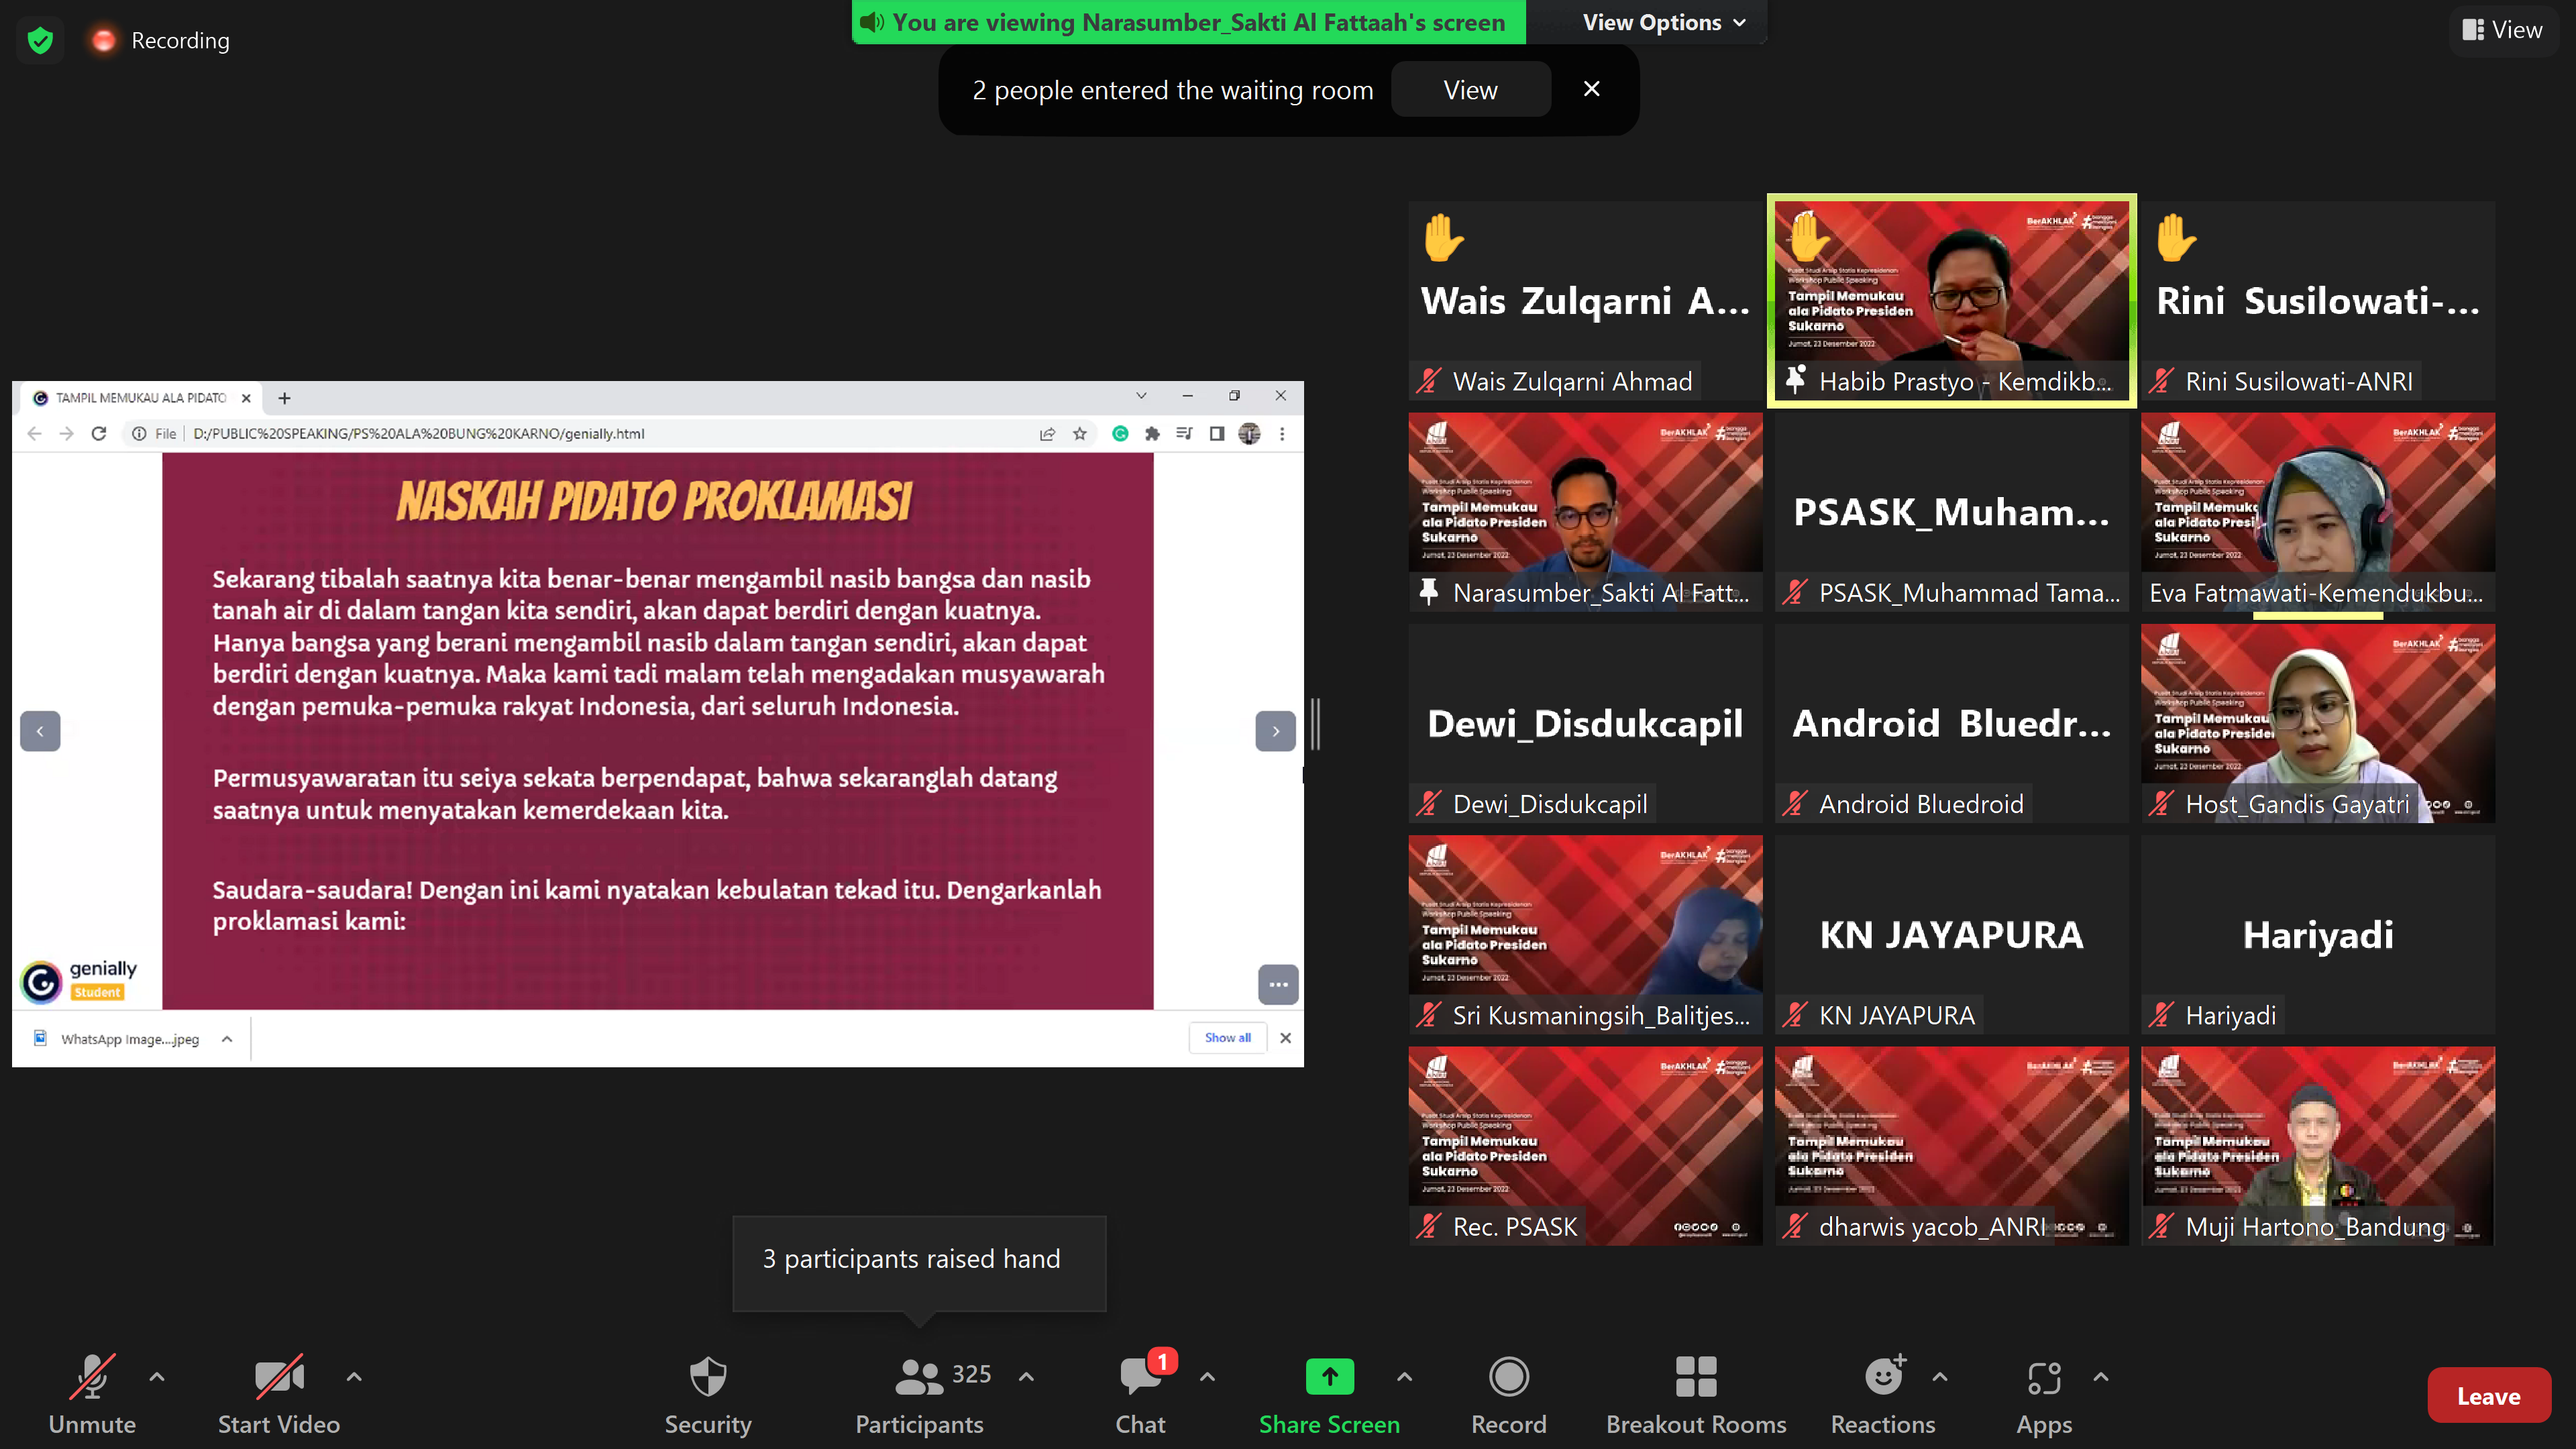 PSAS Kepresidenan Mengadakan Peningkatan Kemampuan Public Speaking dengan Meniru Gaya Berpidato Presiden Sukarno